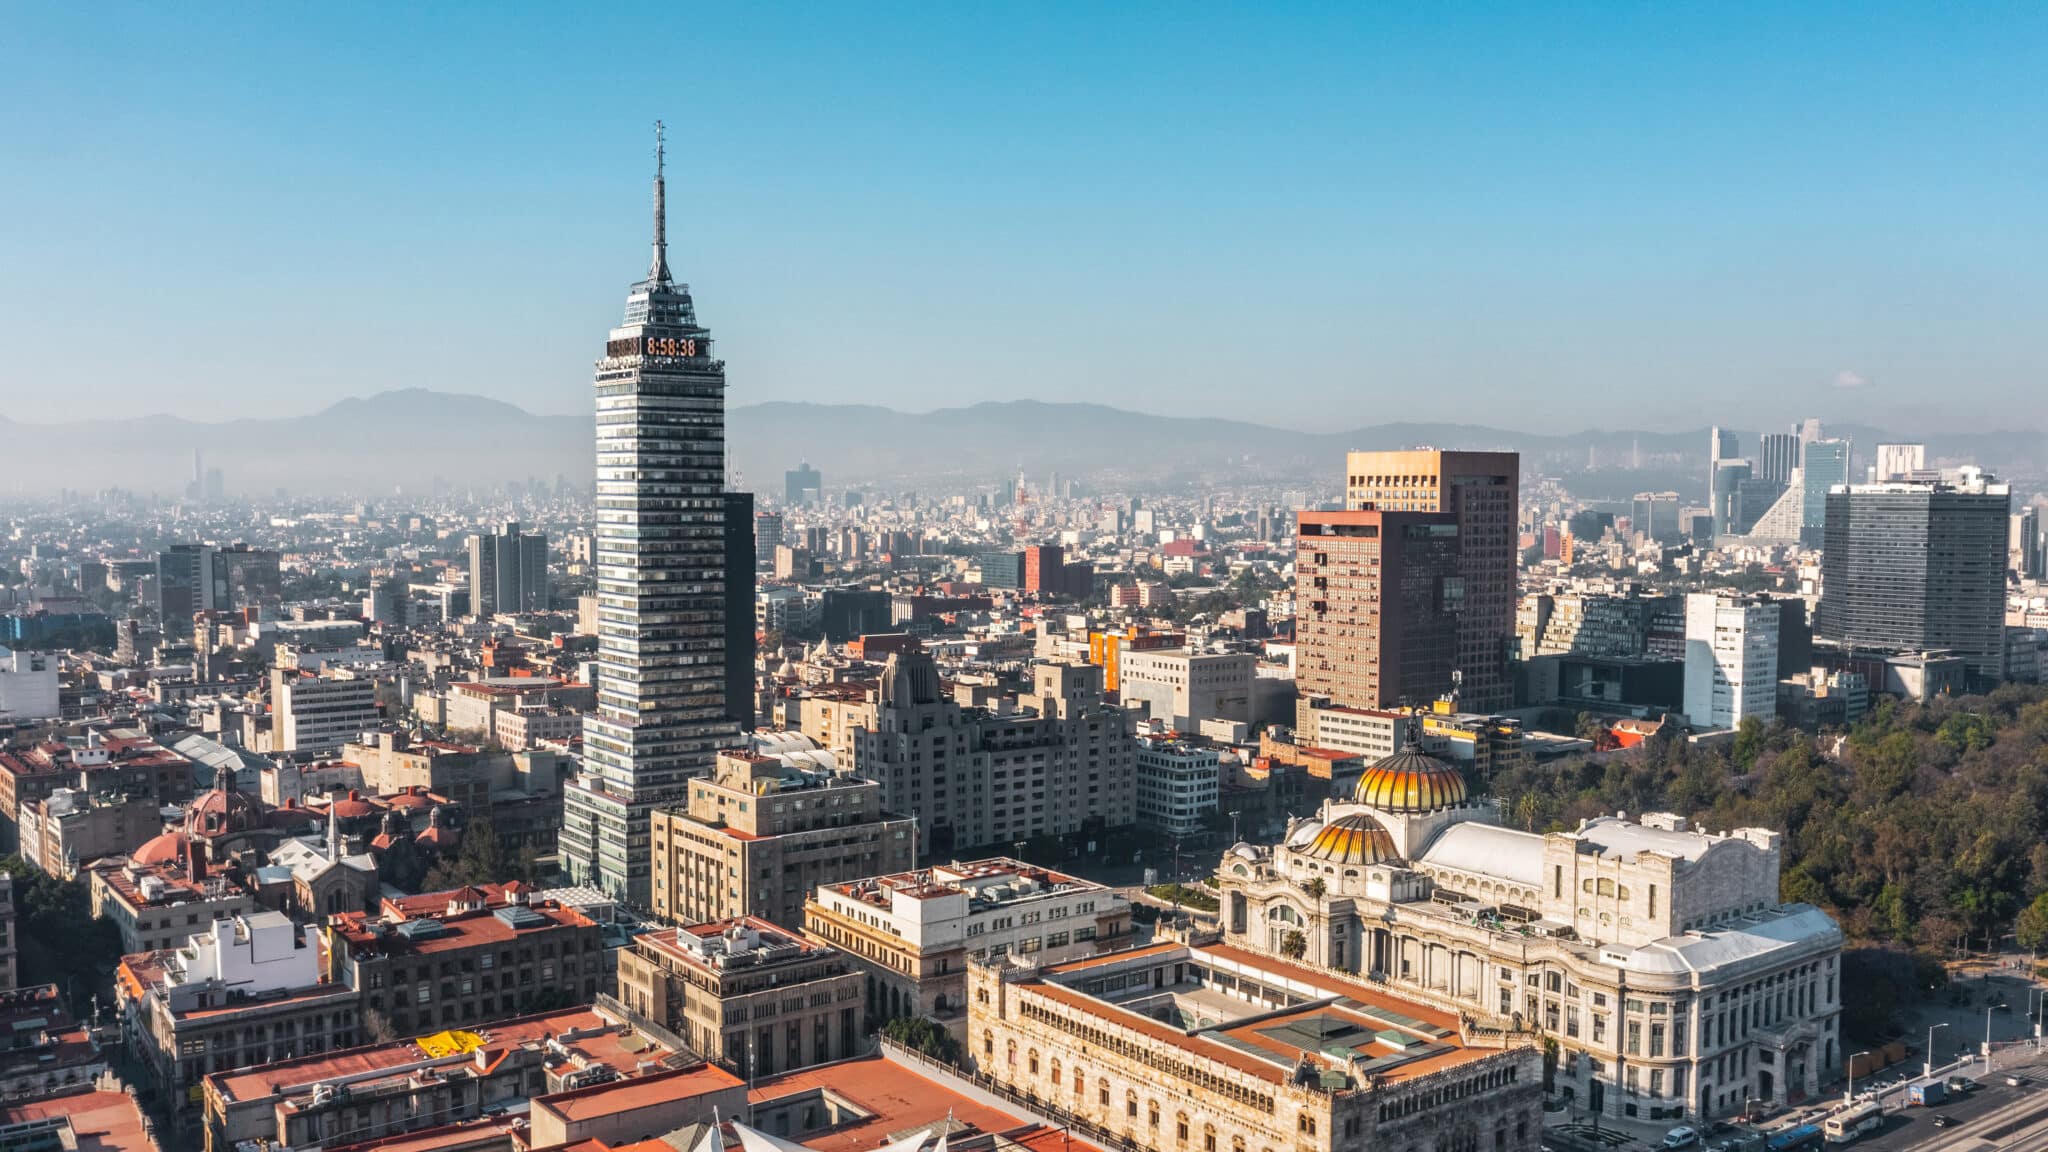 Cityscape of Mexico City